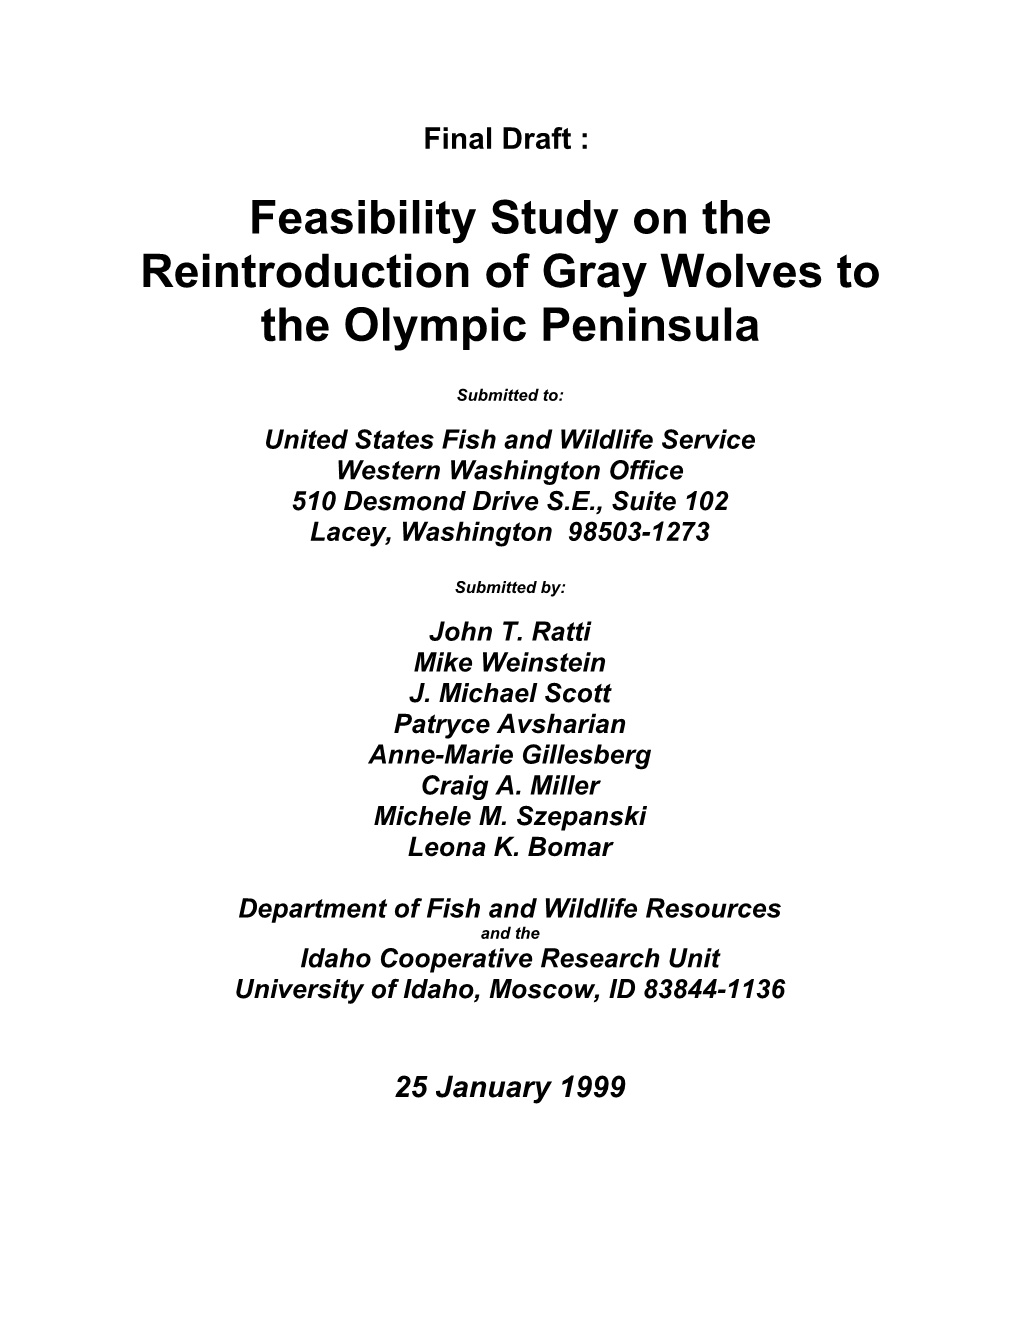 Olympic Peninsula Wolf Reintroduction Feasibility Study